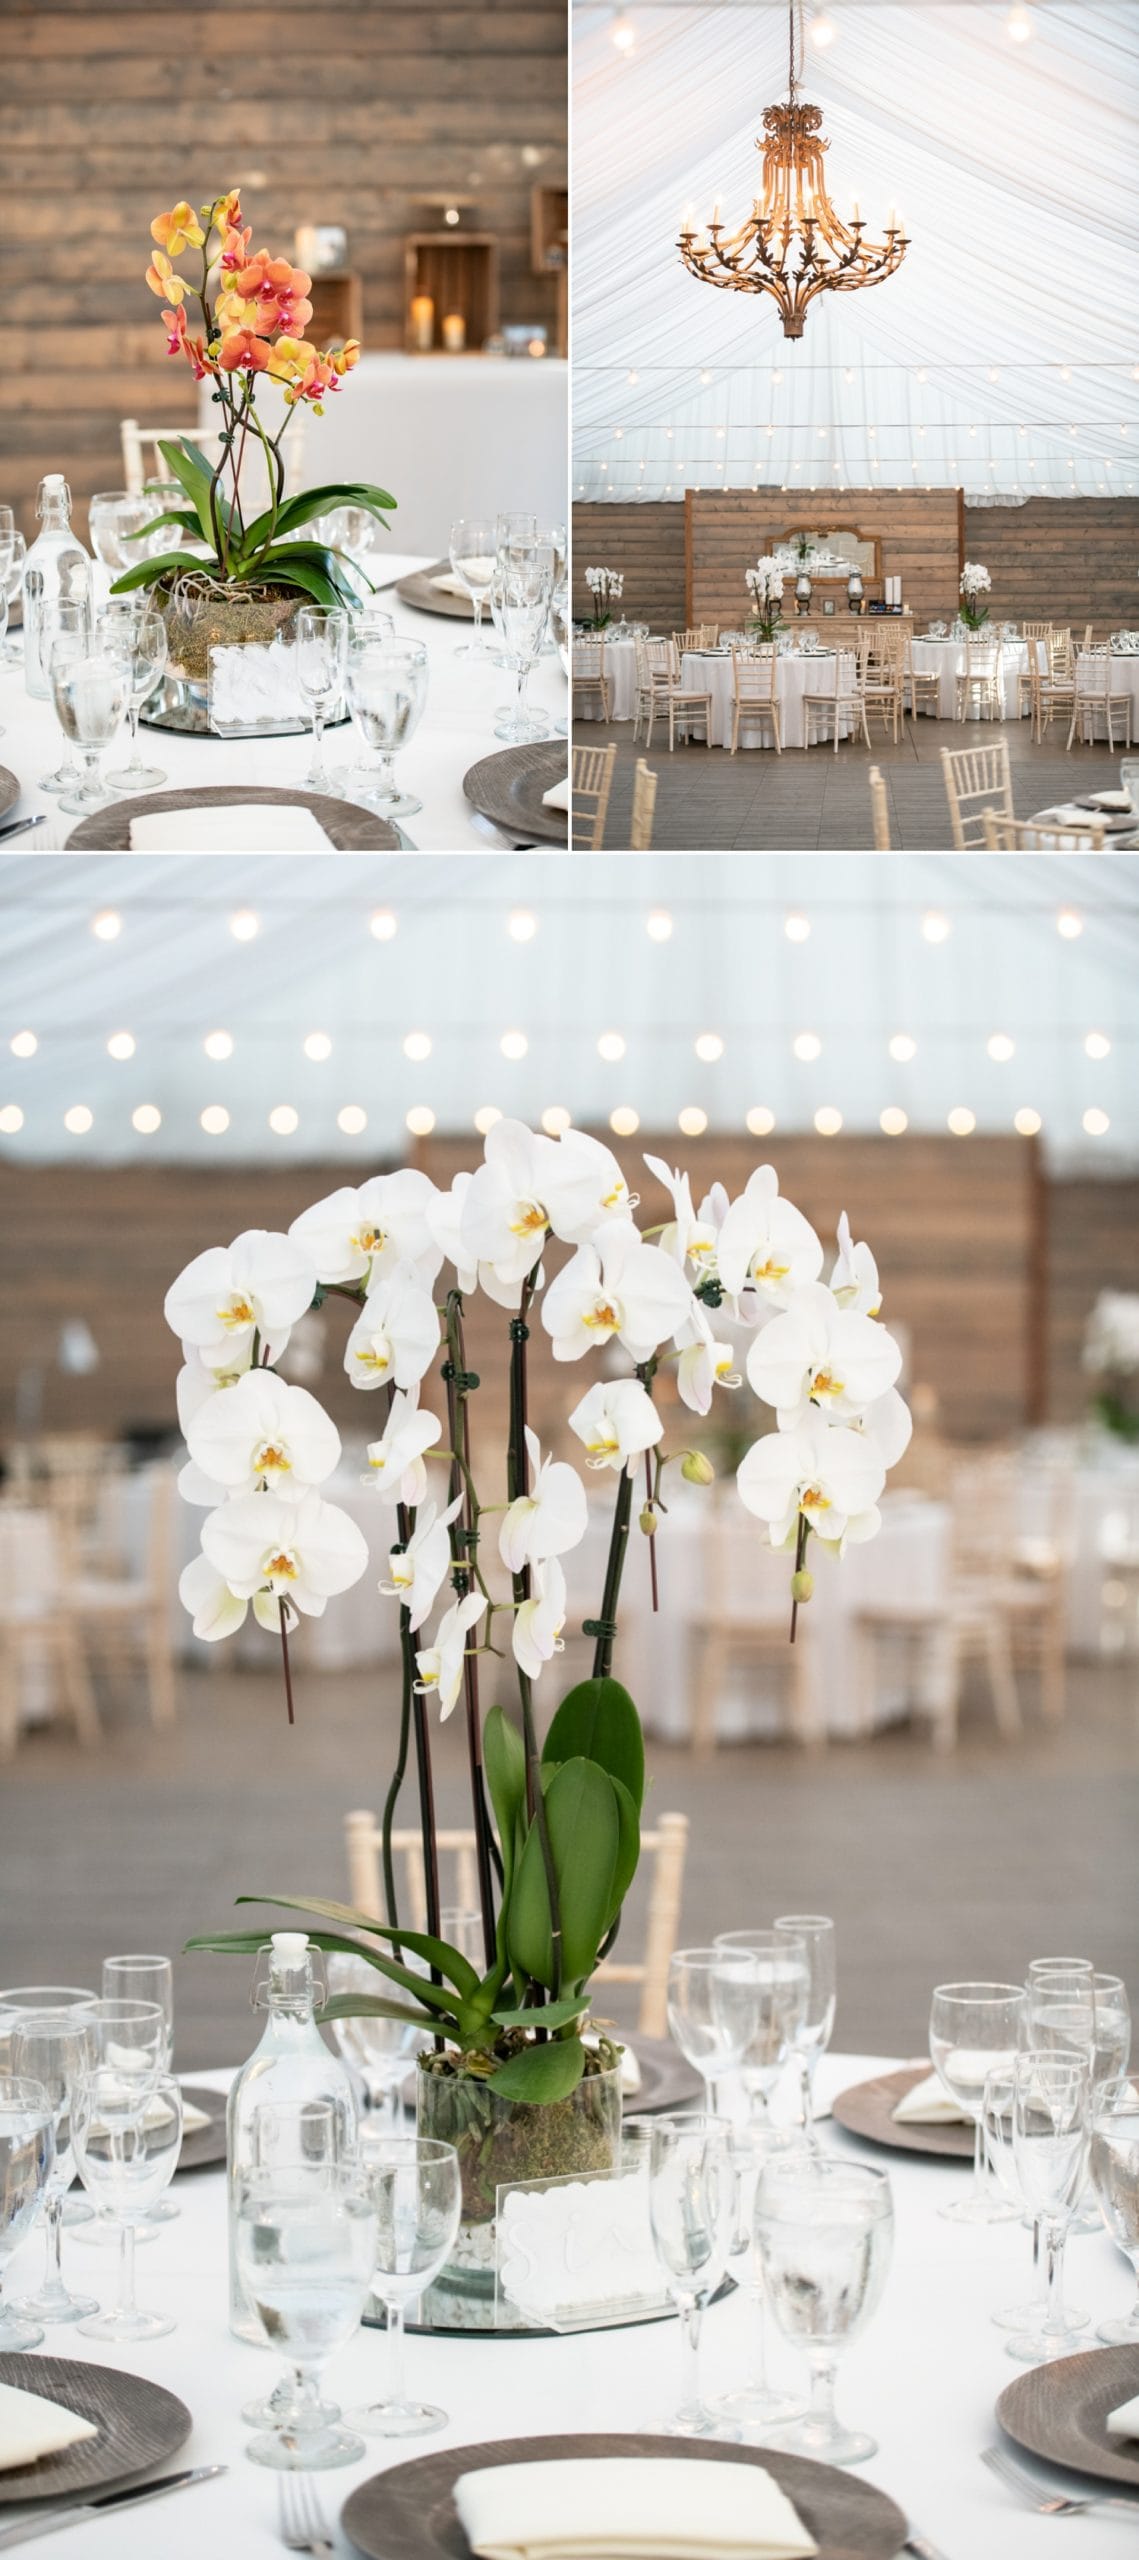 Reception setup at Botanica a Trademark wedding venue